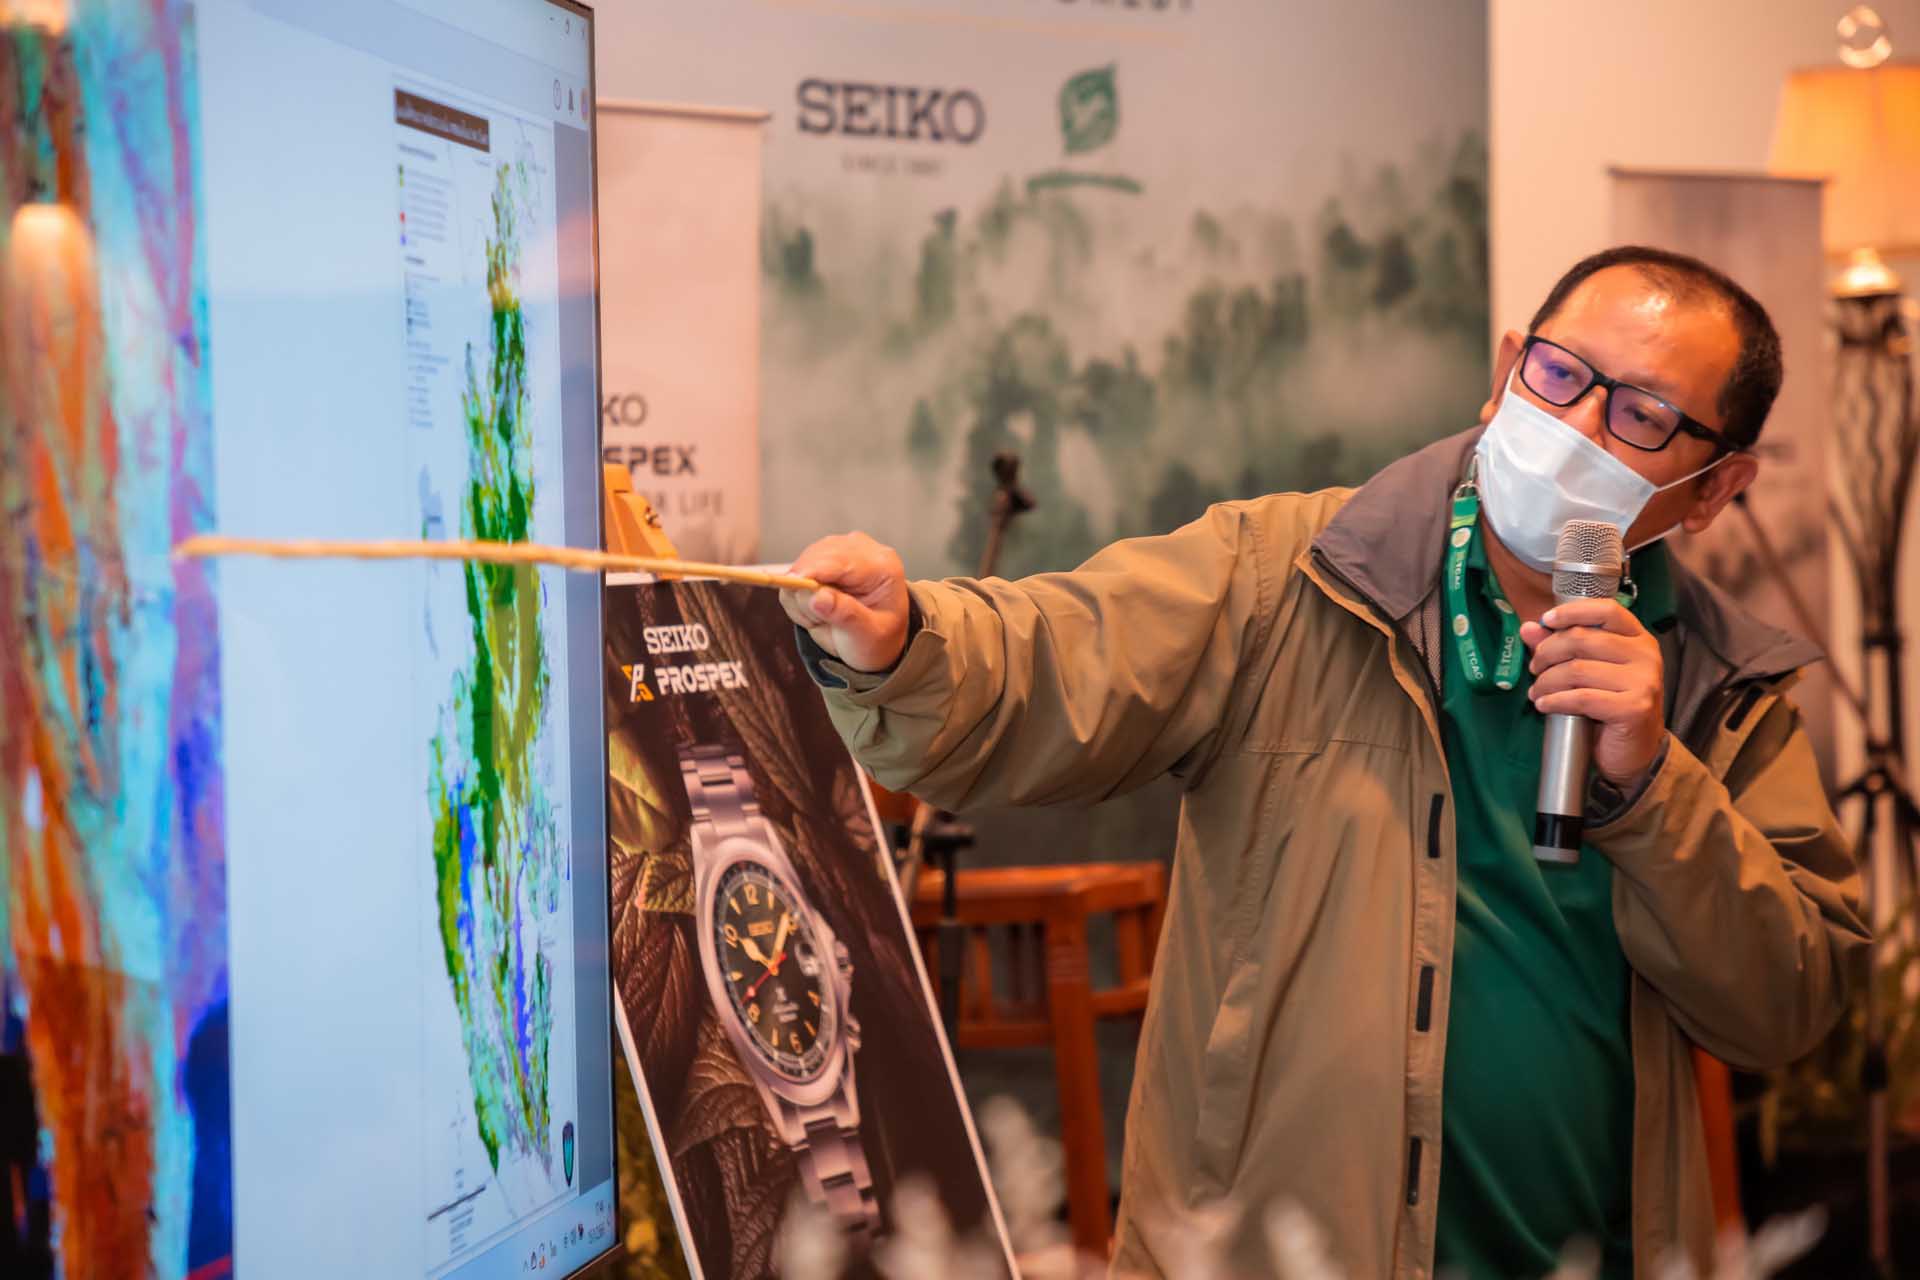 Seiko พาสื่อพันธมิตรทำกิจกรรมพิทักษ์ผืนป่า